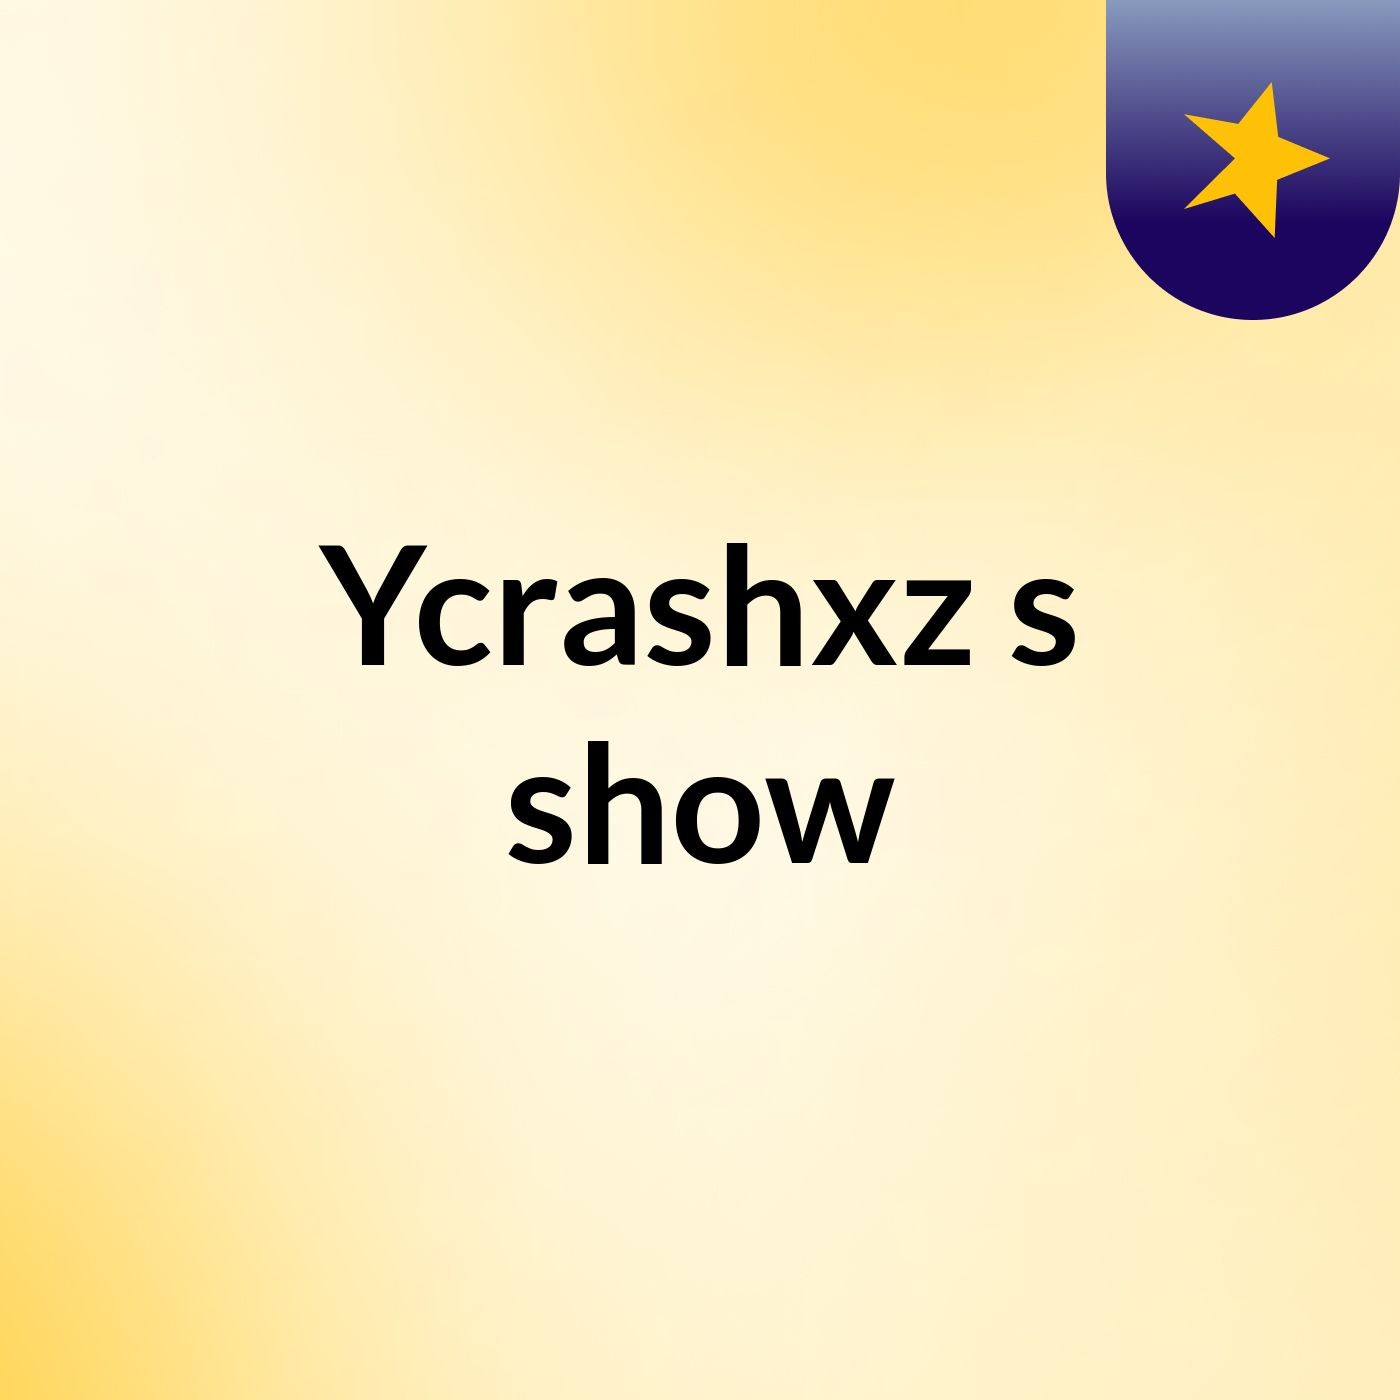 Ycrashxz's show